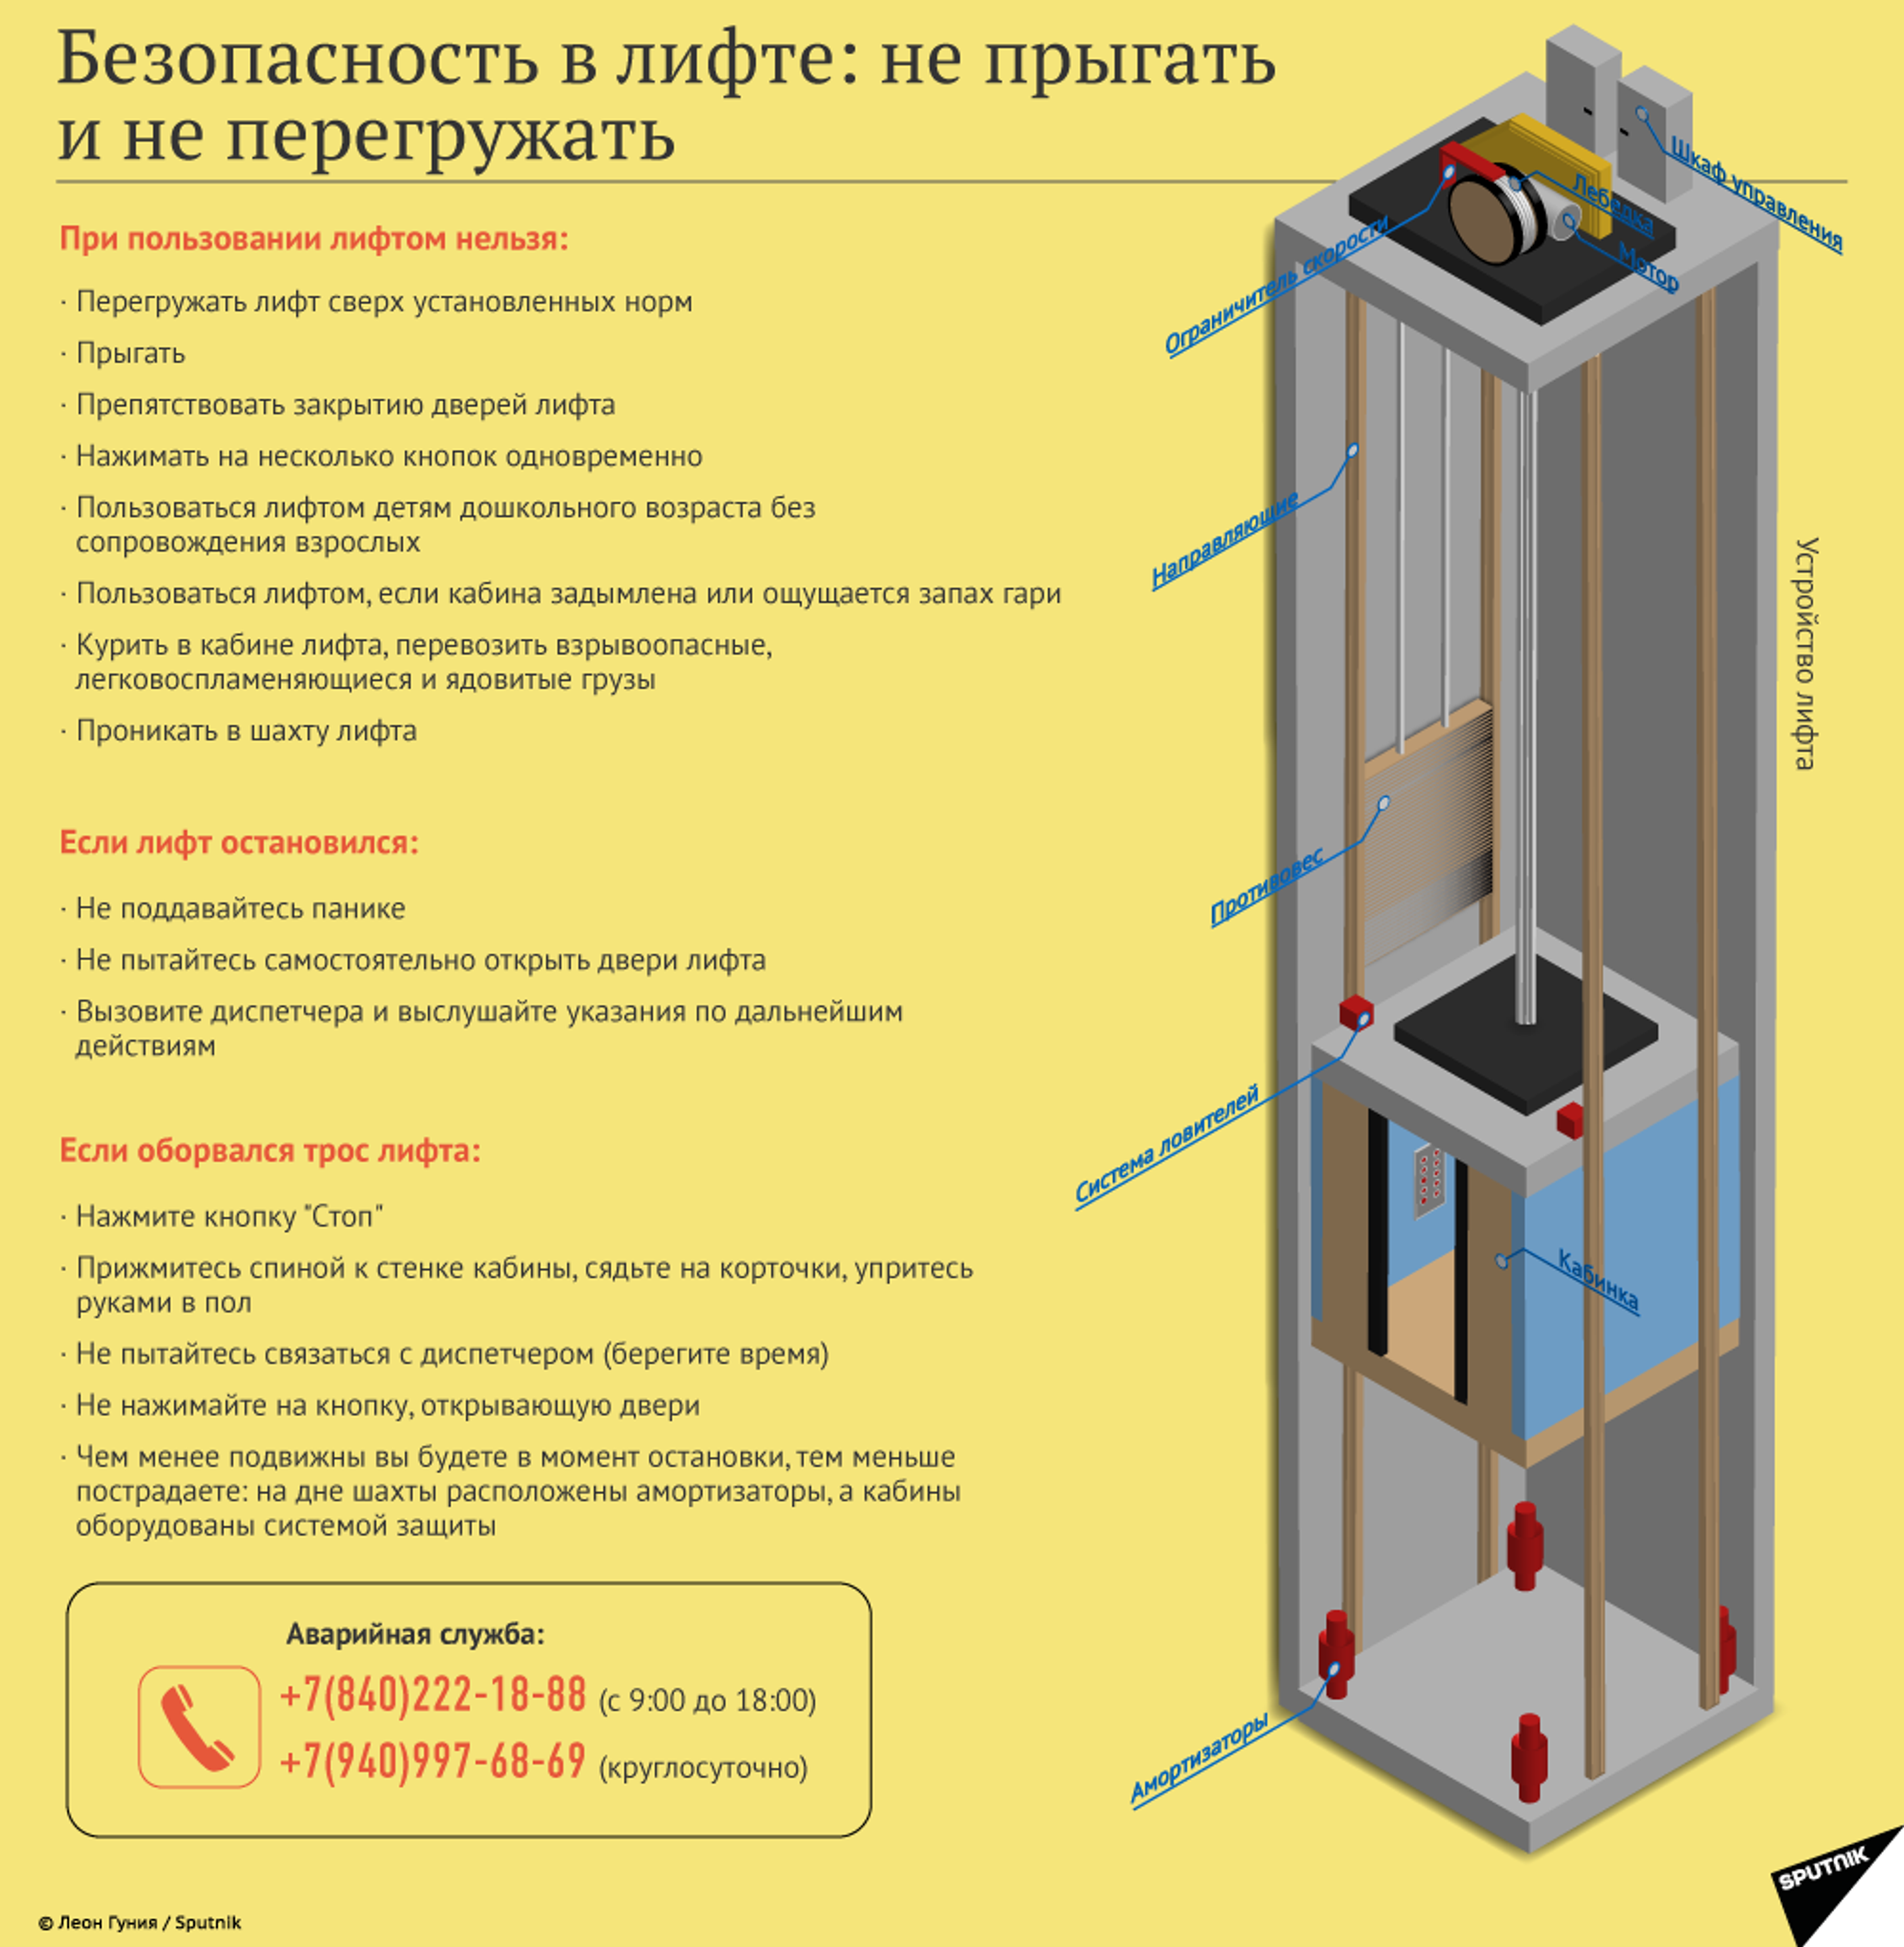 Схема устройства лифта в многоквартирном доме